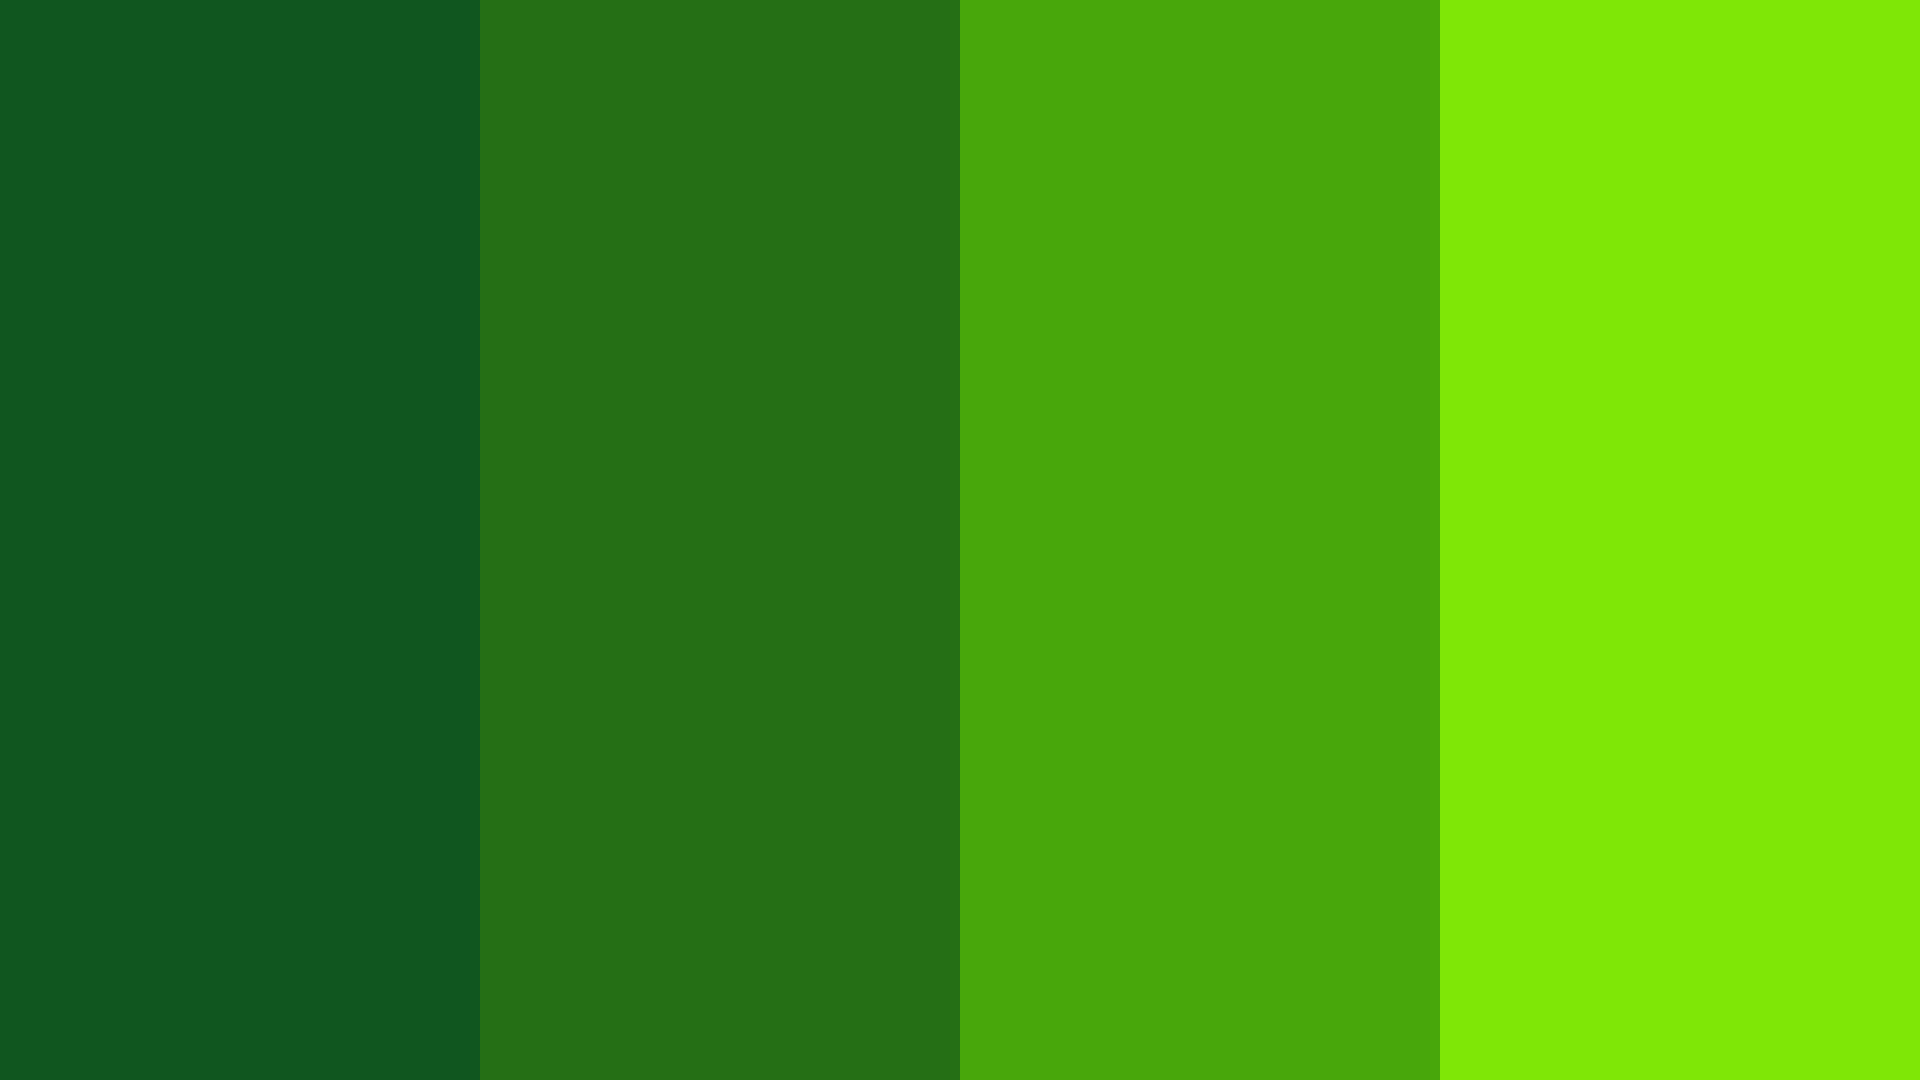 Proper Green Tones Color Scheme » Green » SchemeColor.com